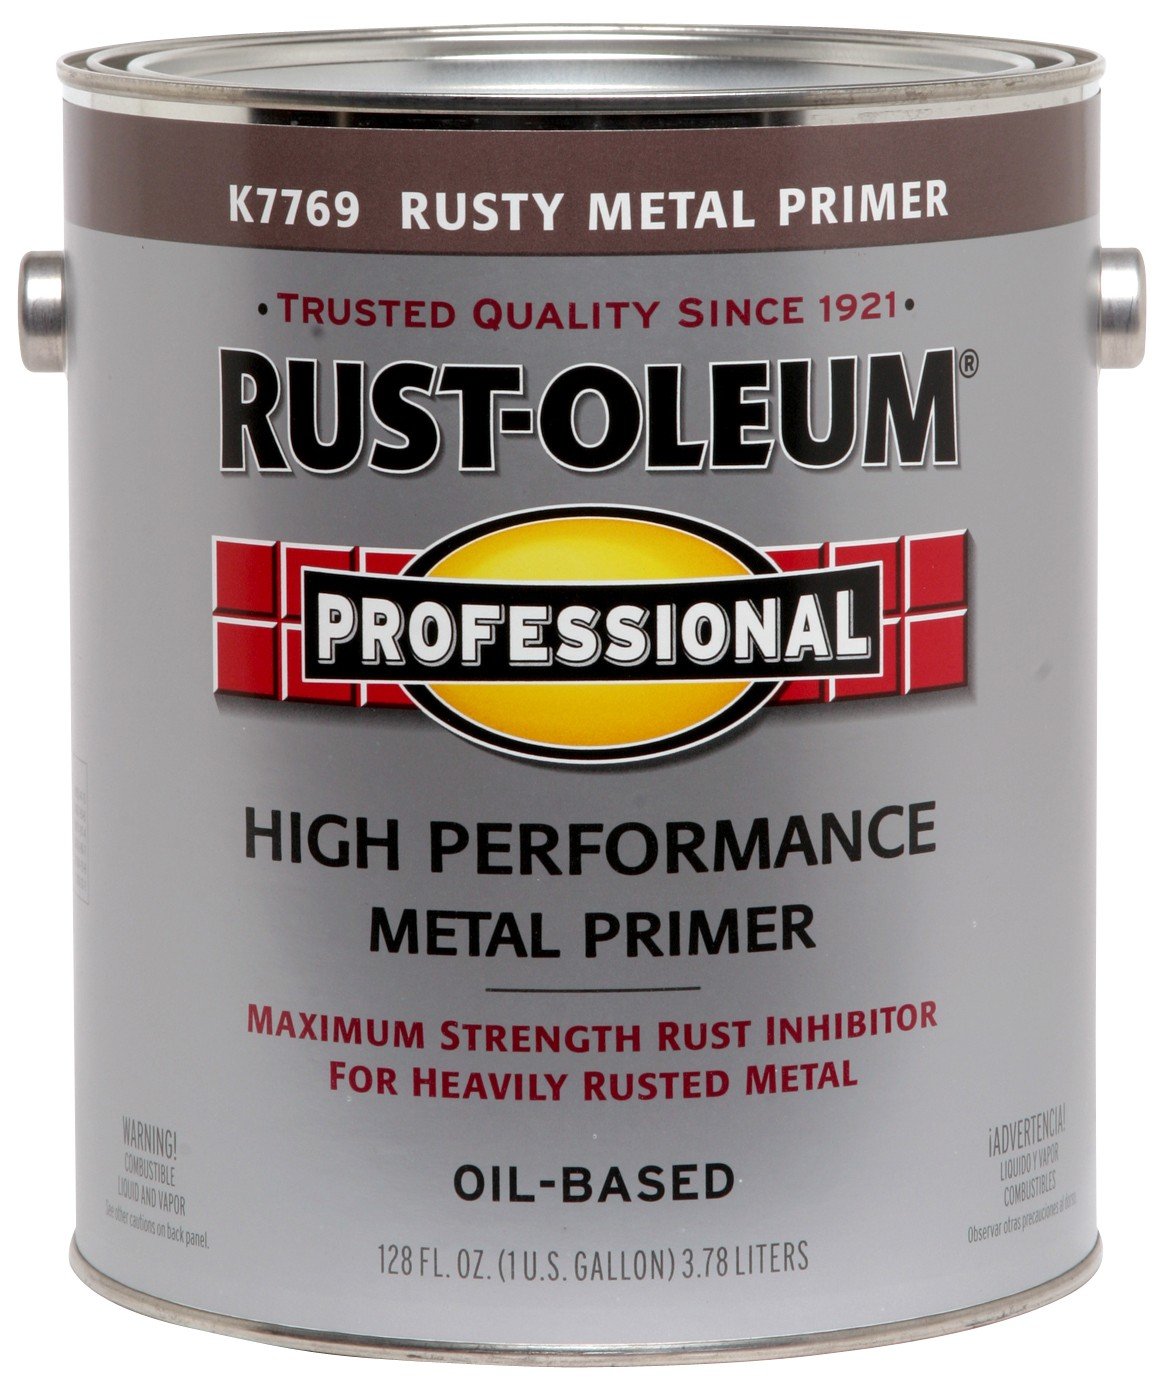 Rust-Oleum Professional Rusty Red Metal Primer Gallon - K7769402